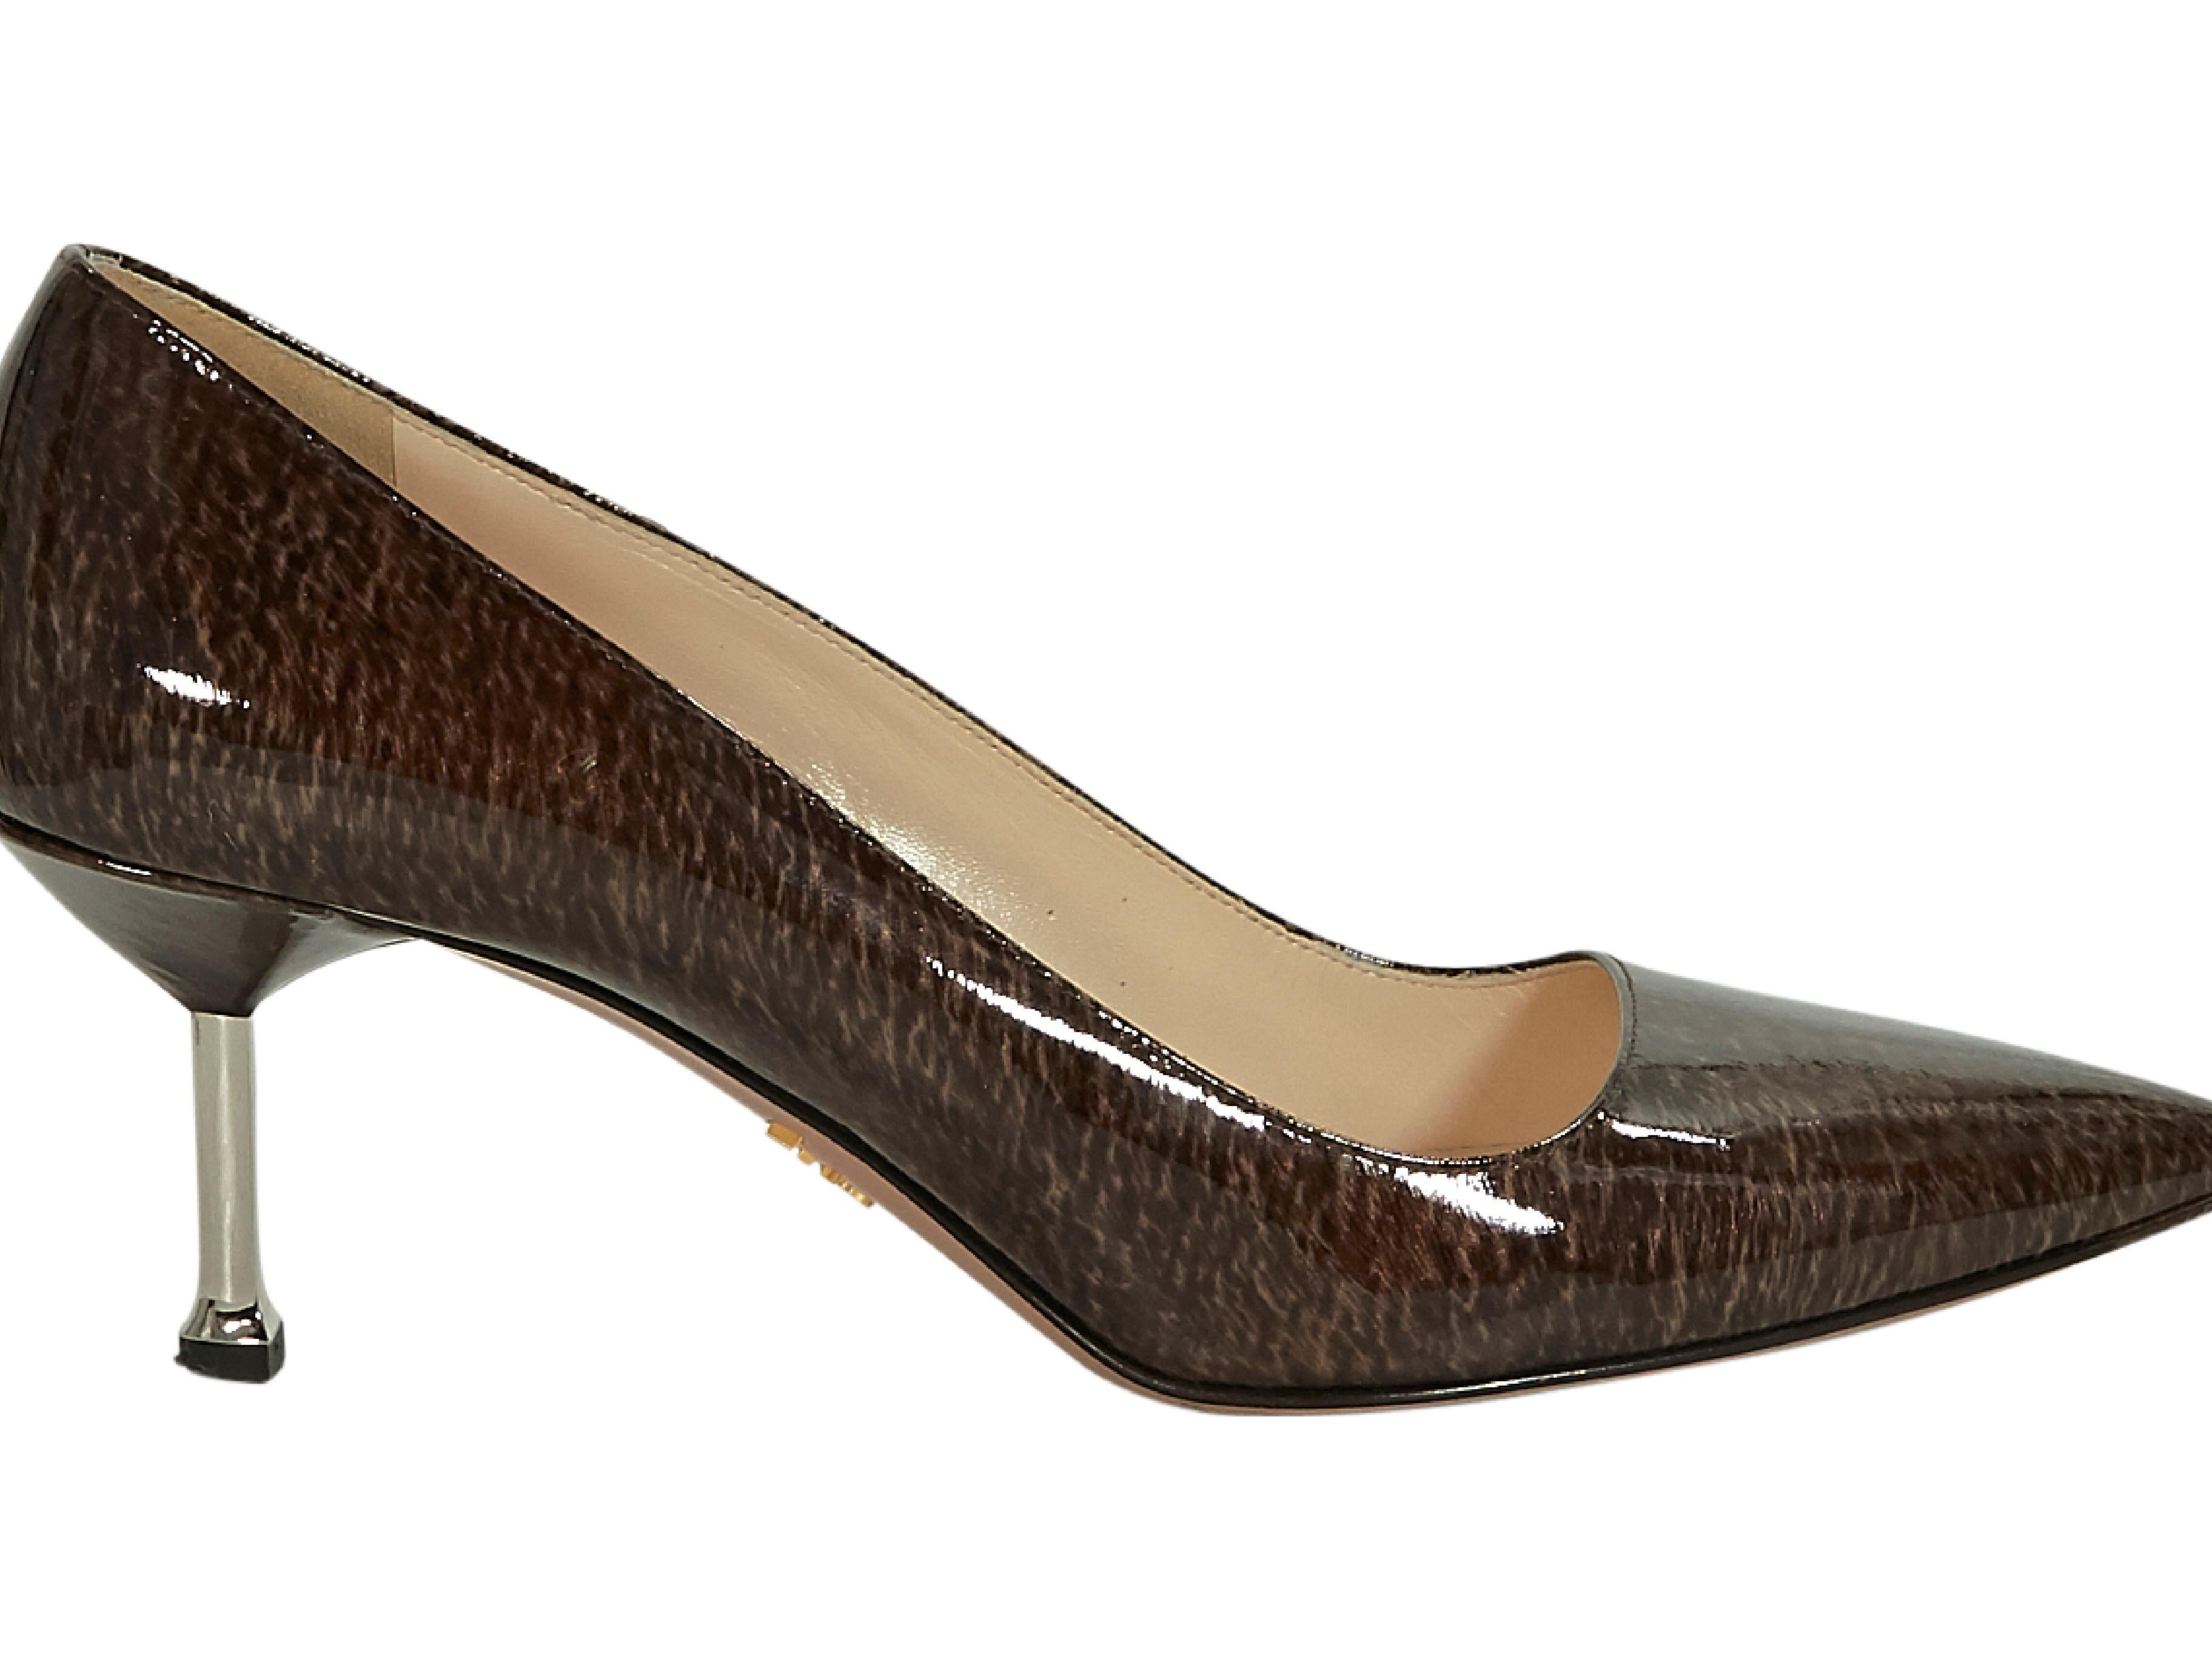 Product details:  Brown printed patent leather pumps by Prada.  Metal kitten heel.  Silvertone hardware.  Slip-on style.  2.5